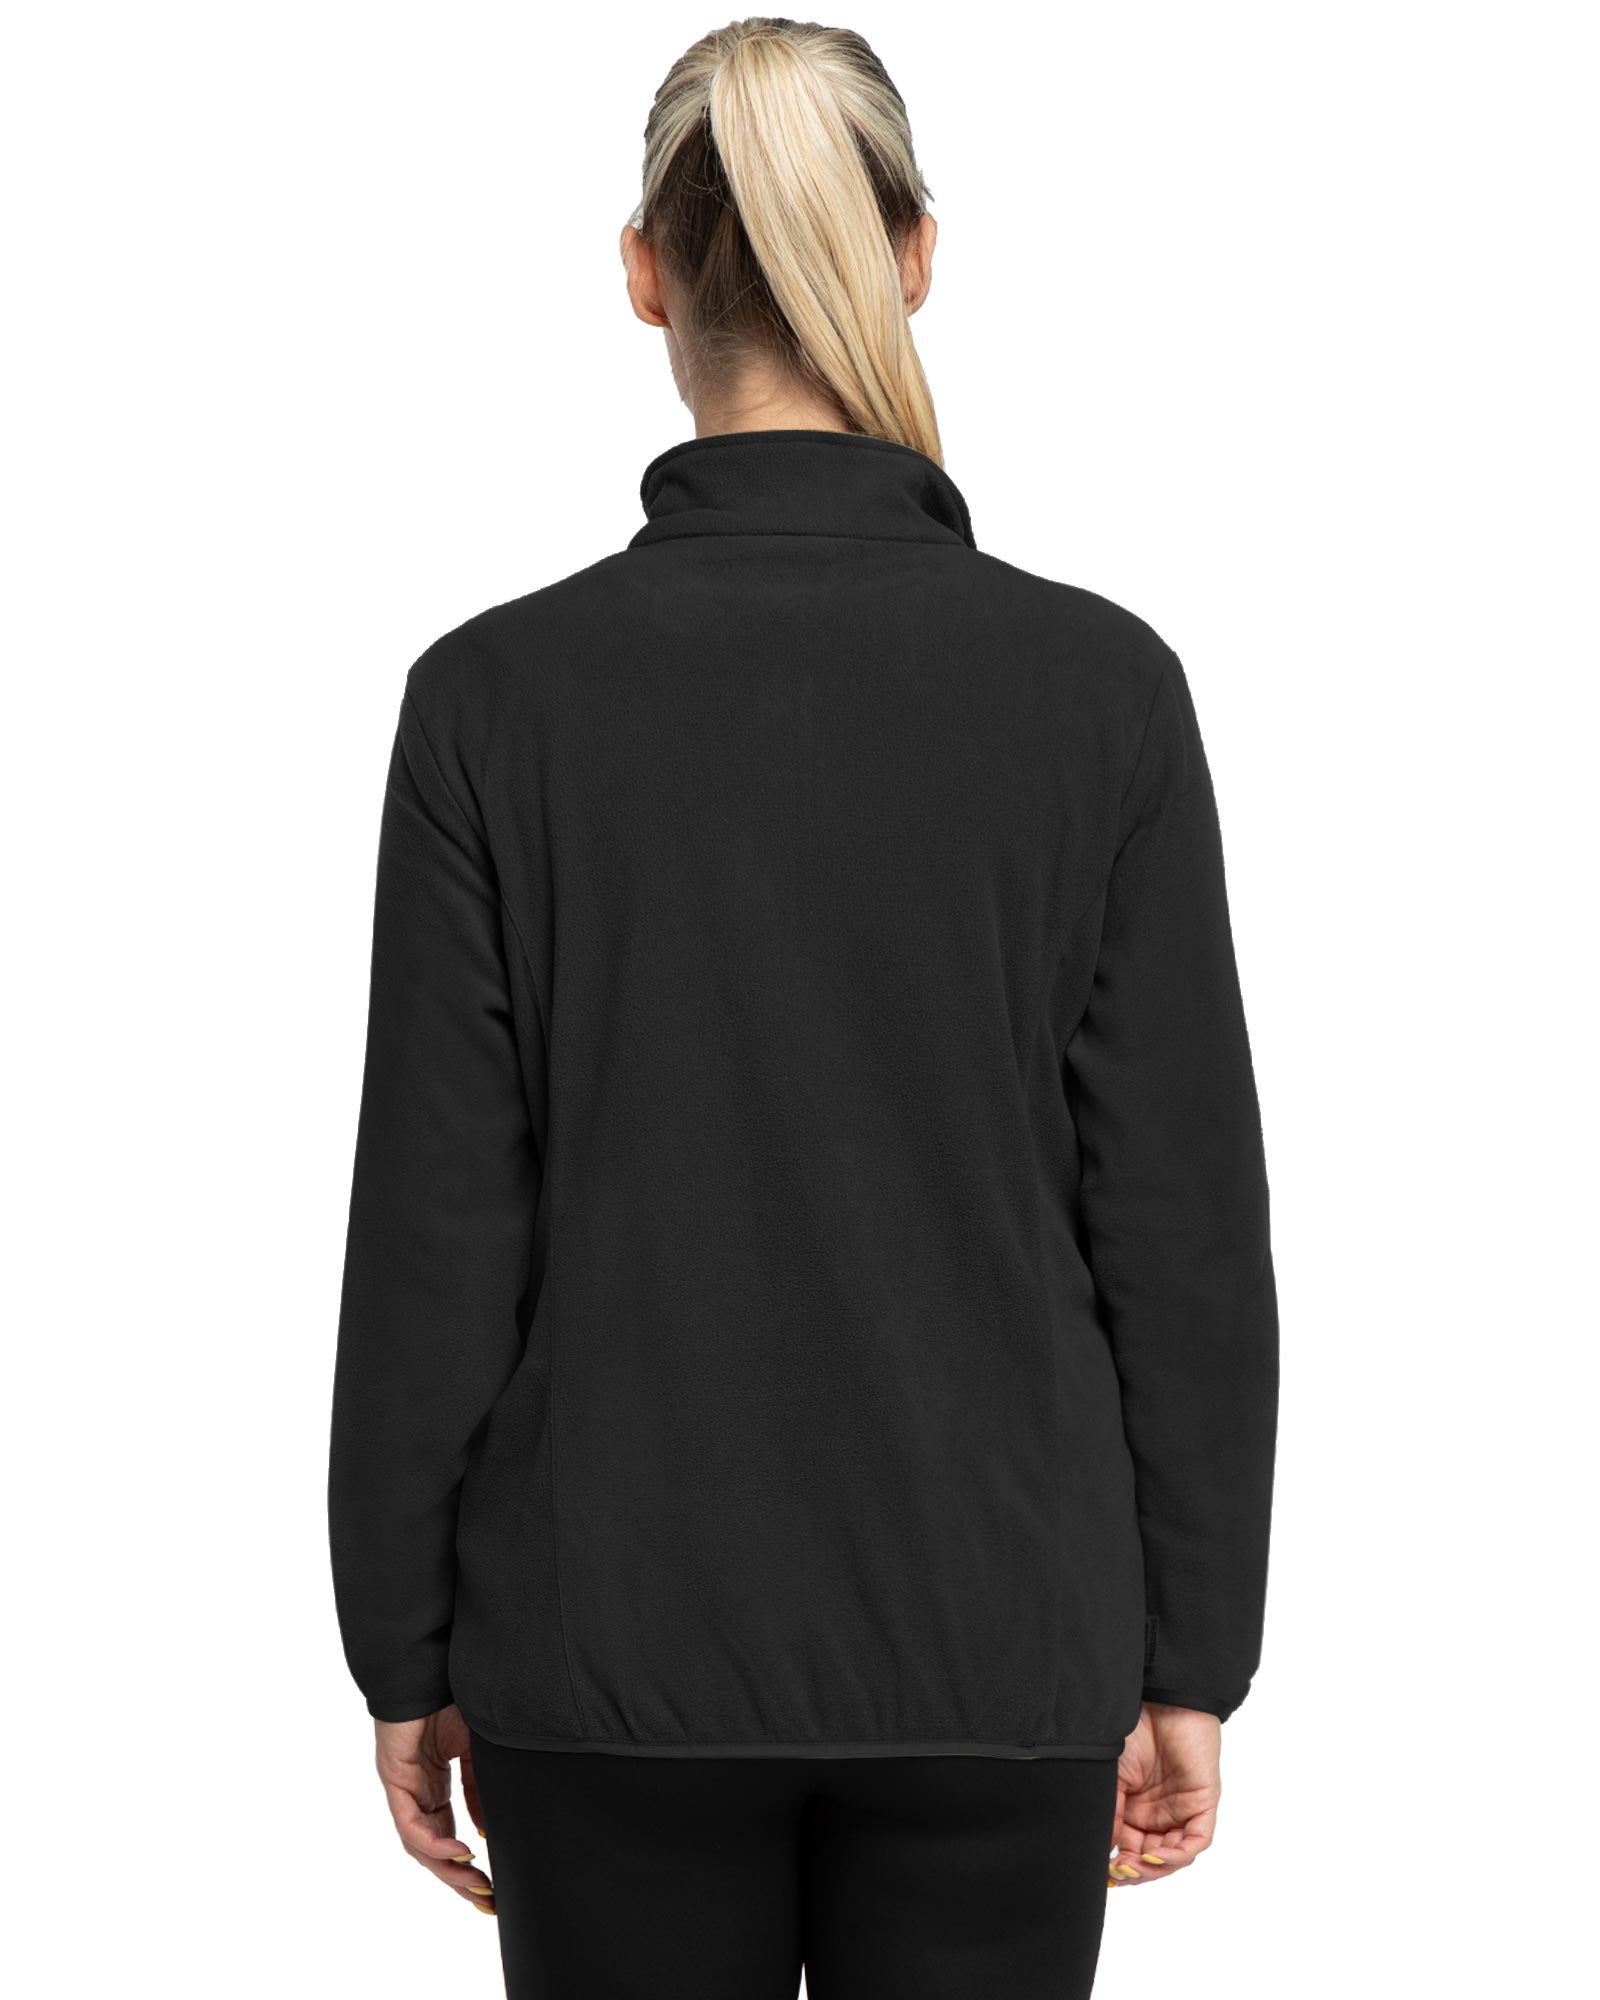 Women's Lightweight Long Sleeve Fleece Pullover Jacket, Quarter Zip To –  33,000ft